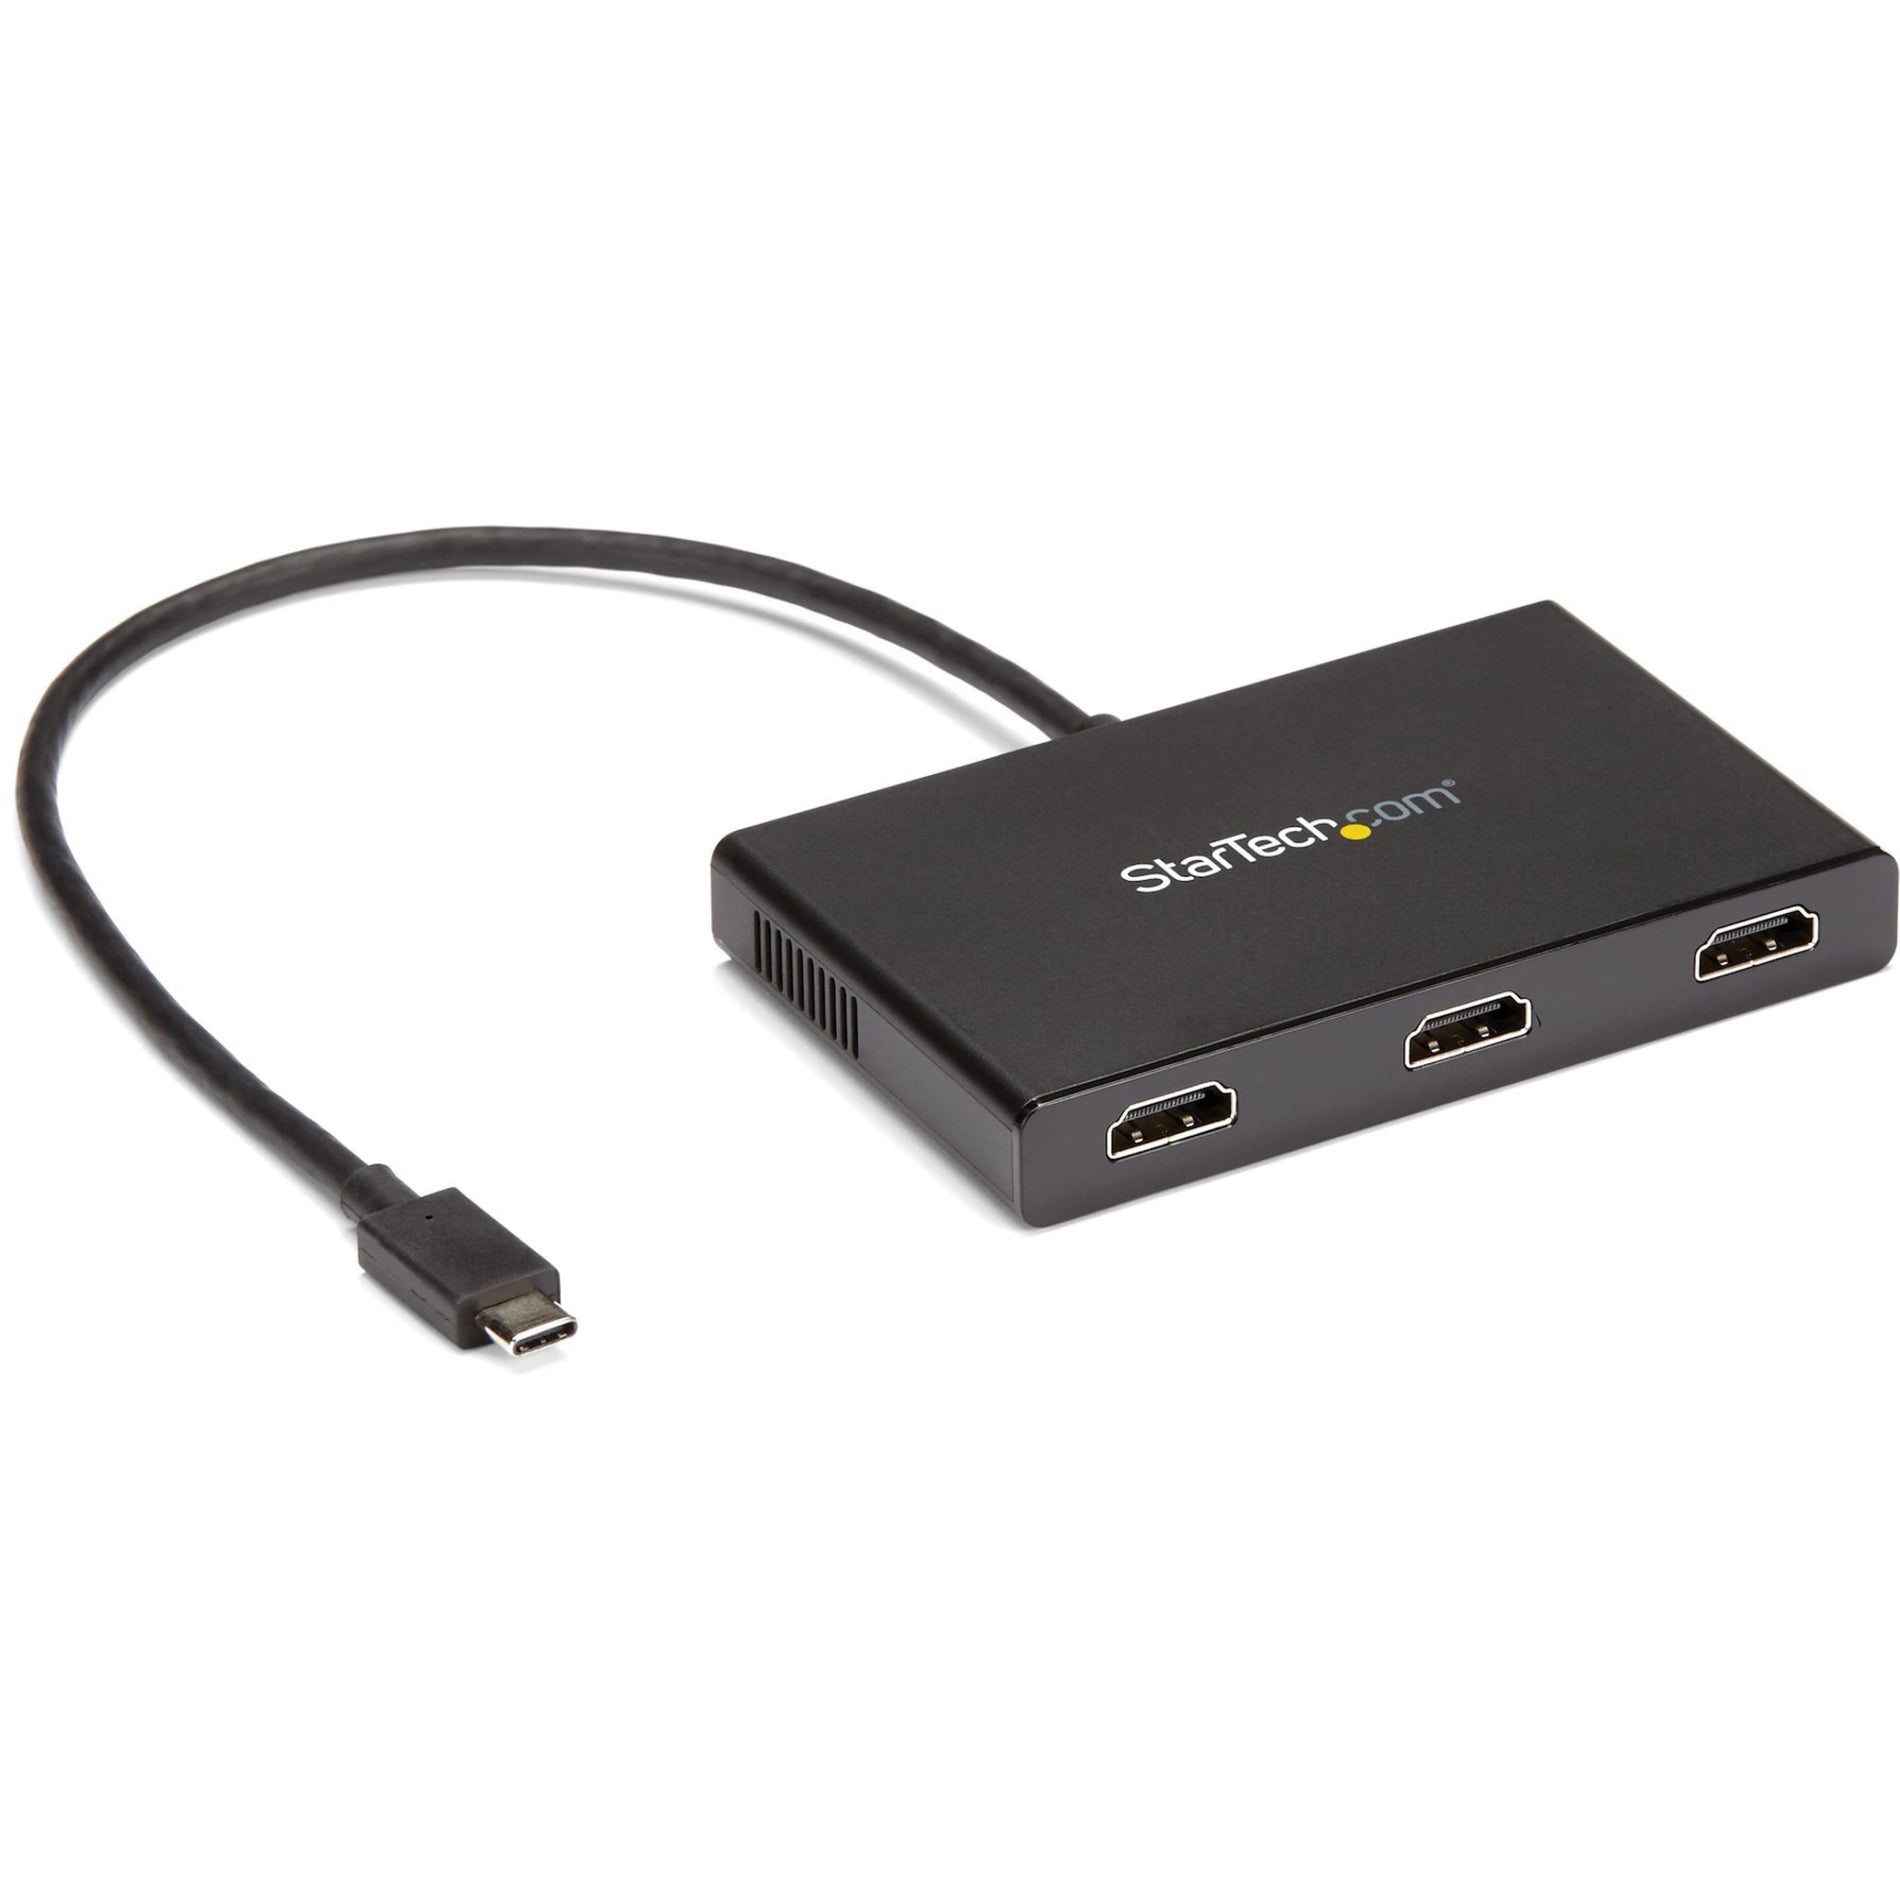 StarTech.com MSTCDP123HD USB C to HDMI Multi-Monitor Adapter - 3-Port MST Hub - USB C Multi Monitor, 4K Video, 3-Year Warranty